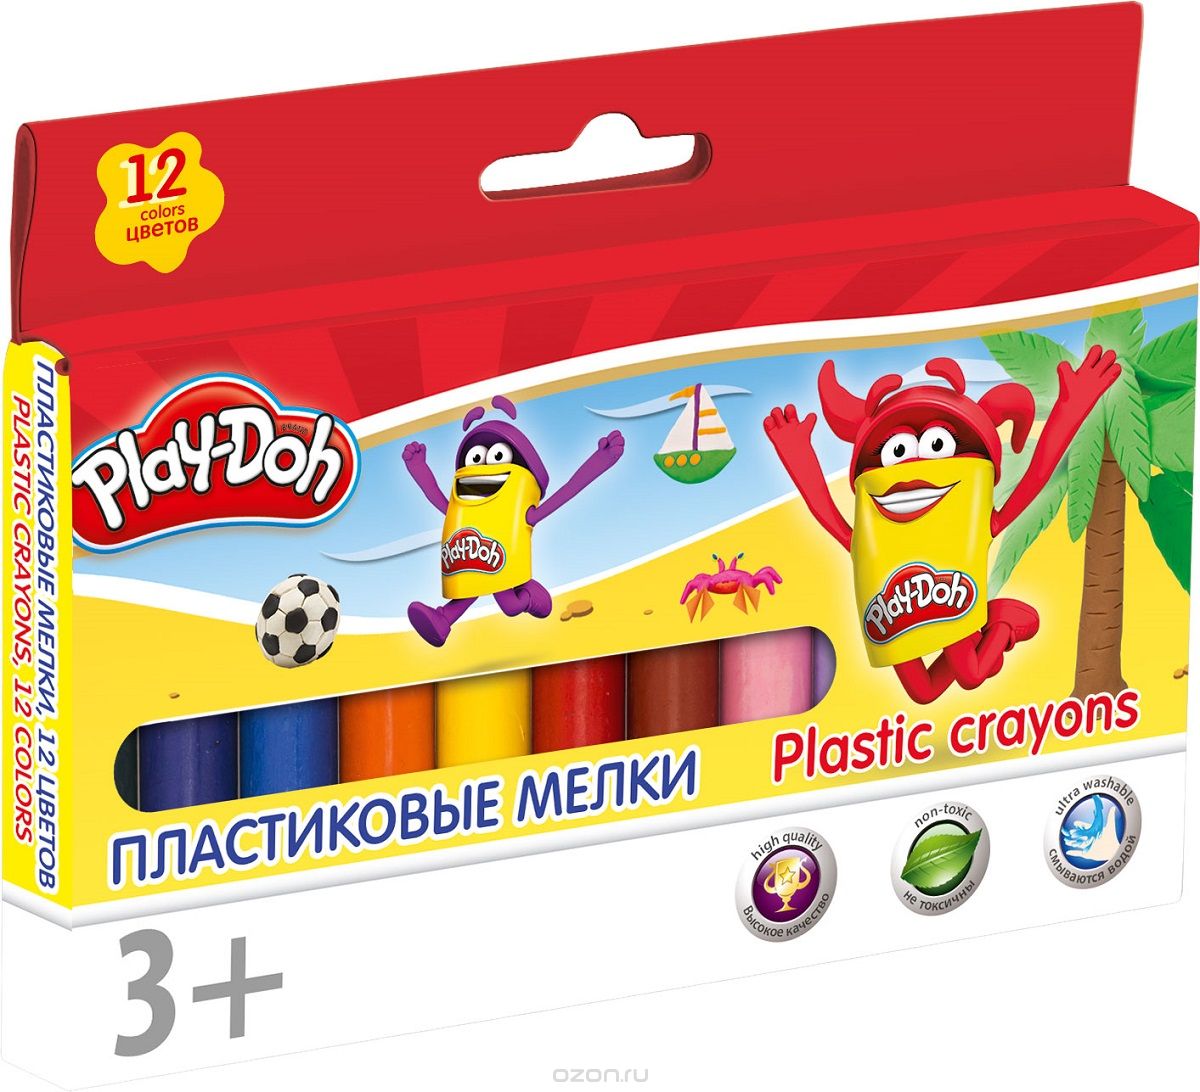 Play-Doh   12 